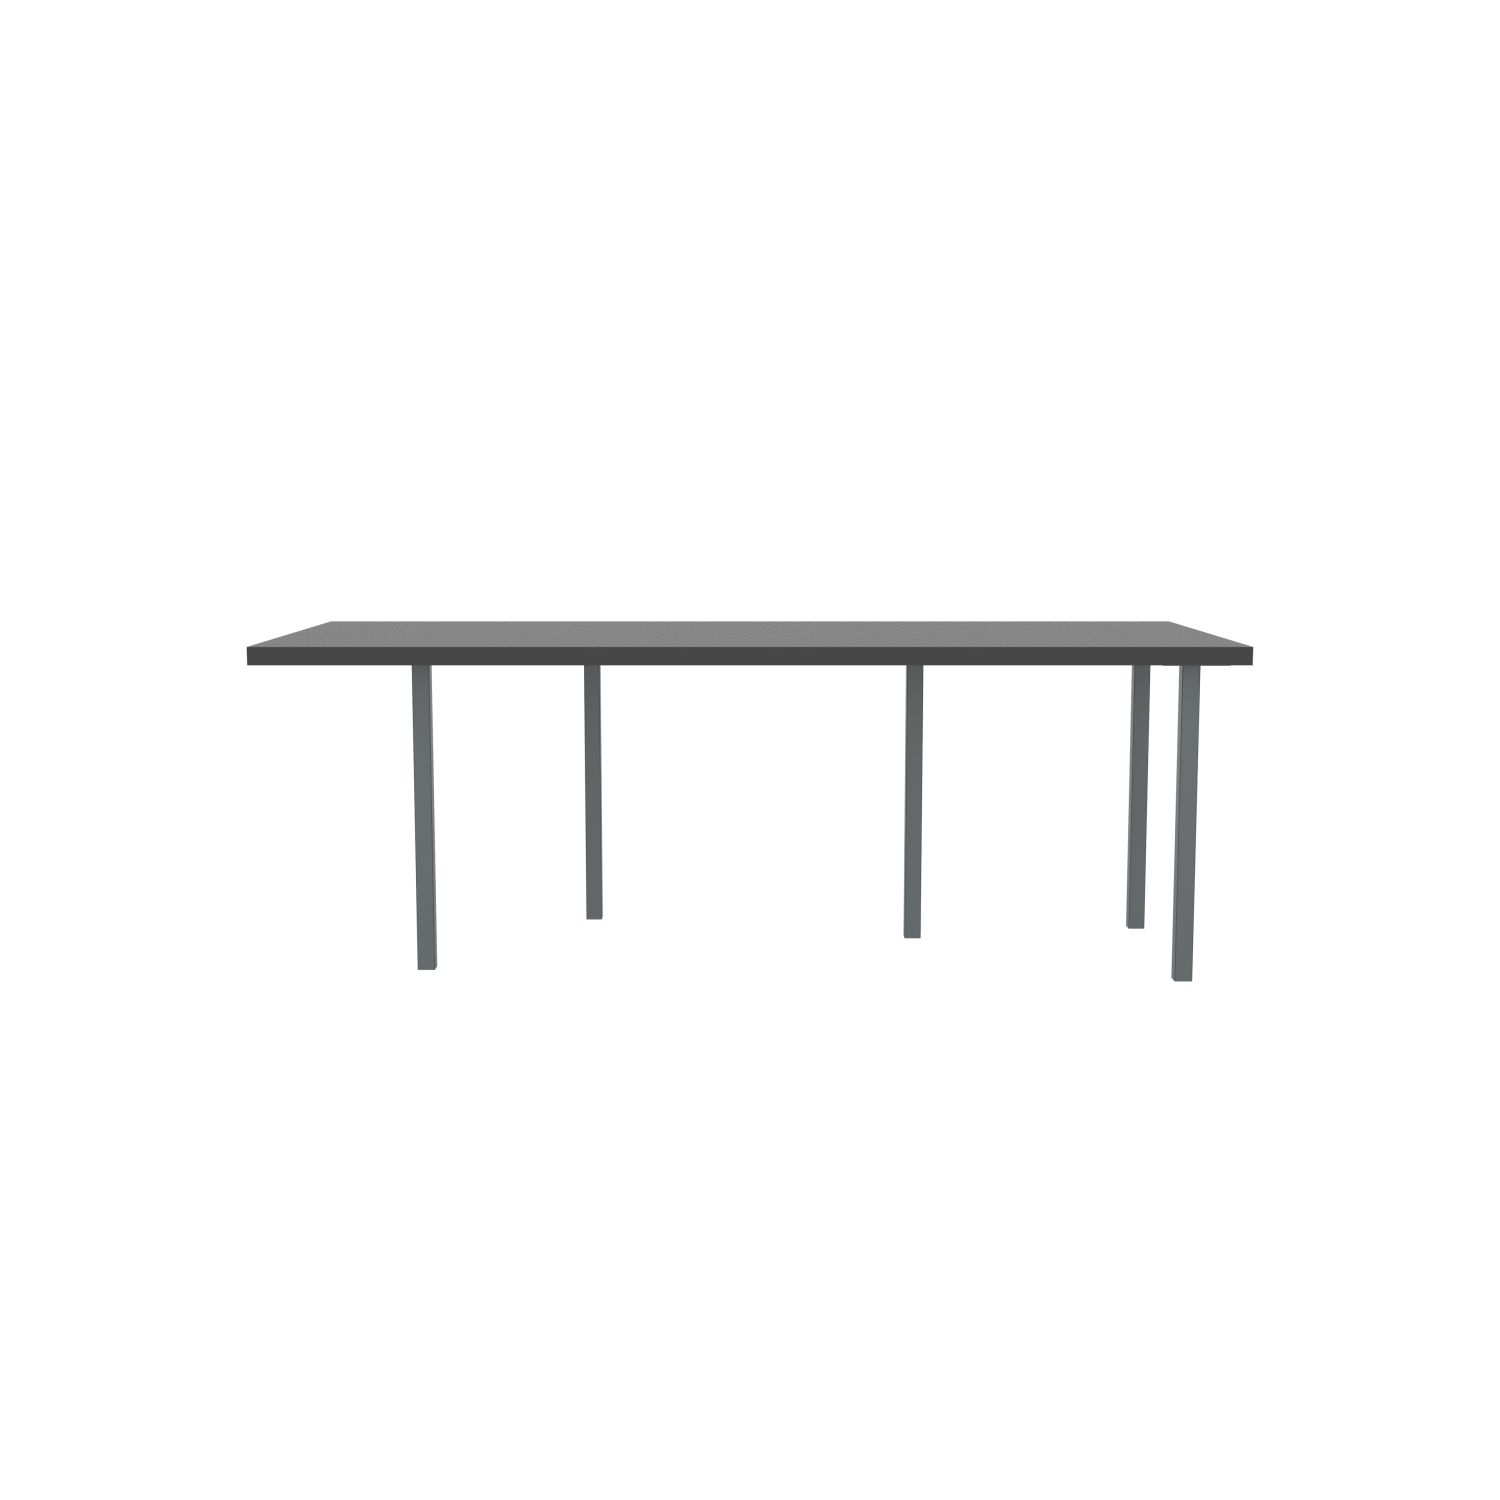 lensvelt bbrand table five fixed heigt 915x218 hpl black 50 mm price level 1 dark grey ral7011